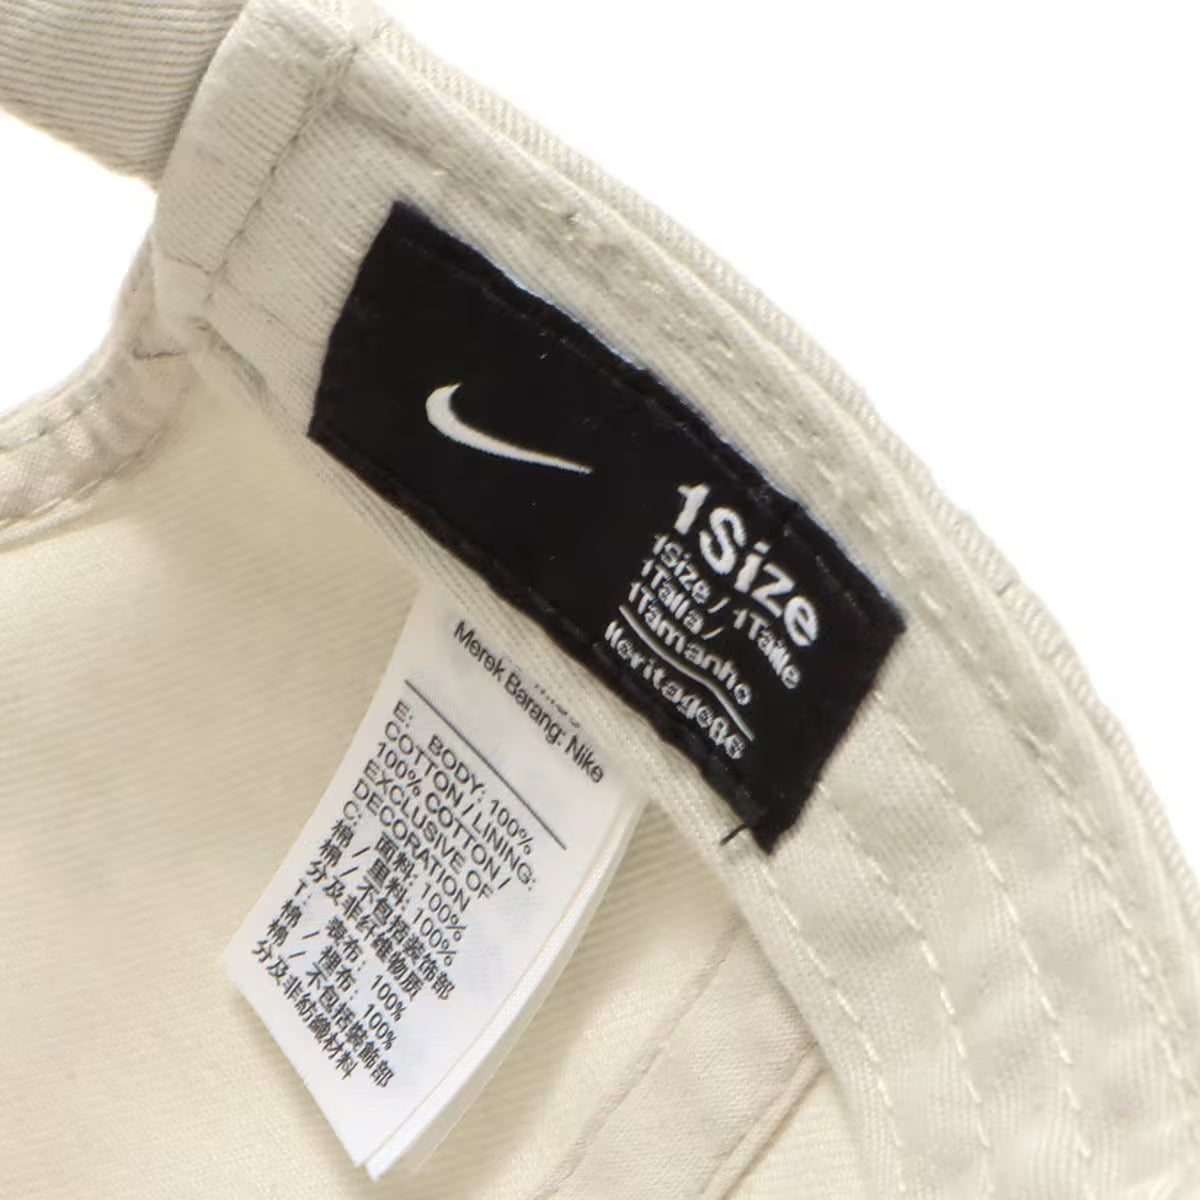 Nike Swoosh Heritage 86 Cap "Light Bone"